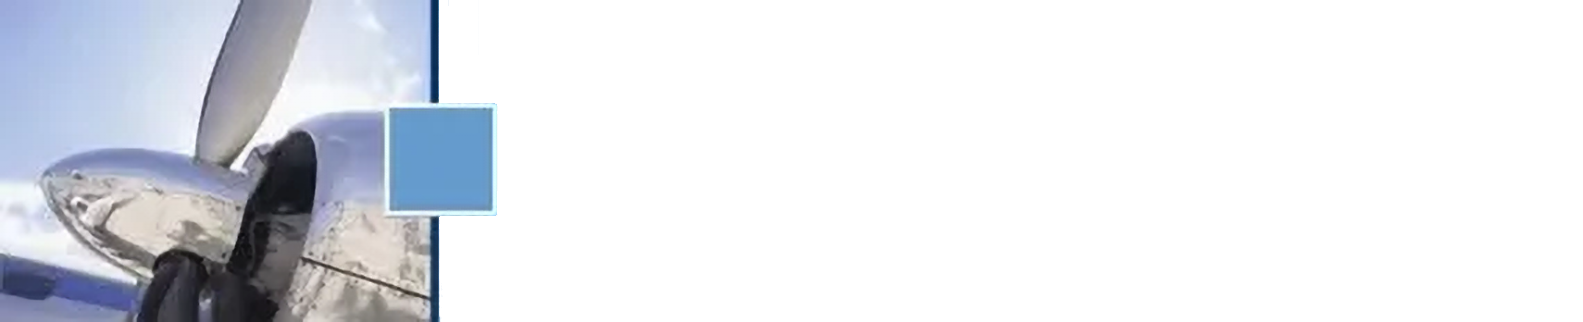 Advance Sales Services UK Ltd Logo